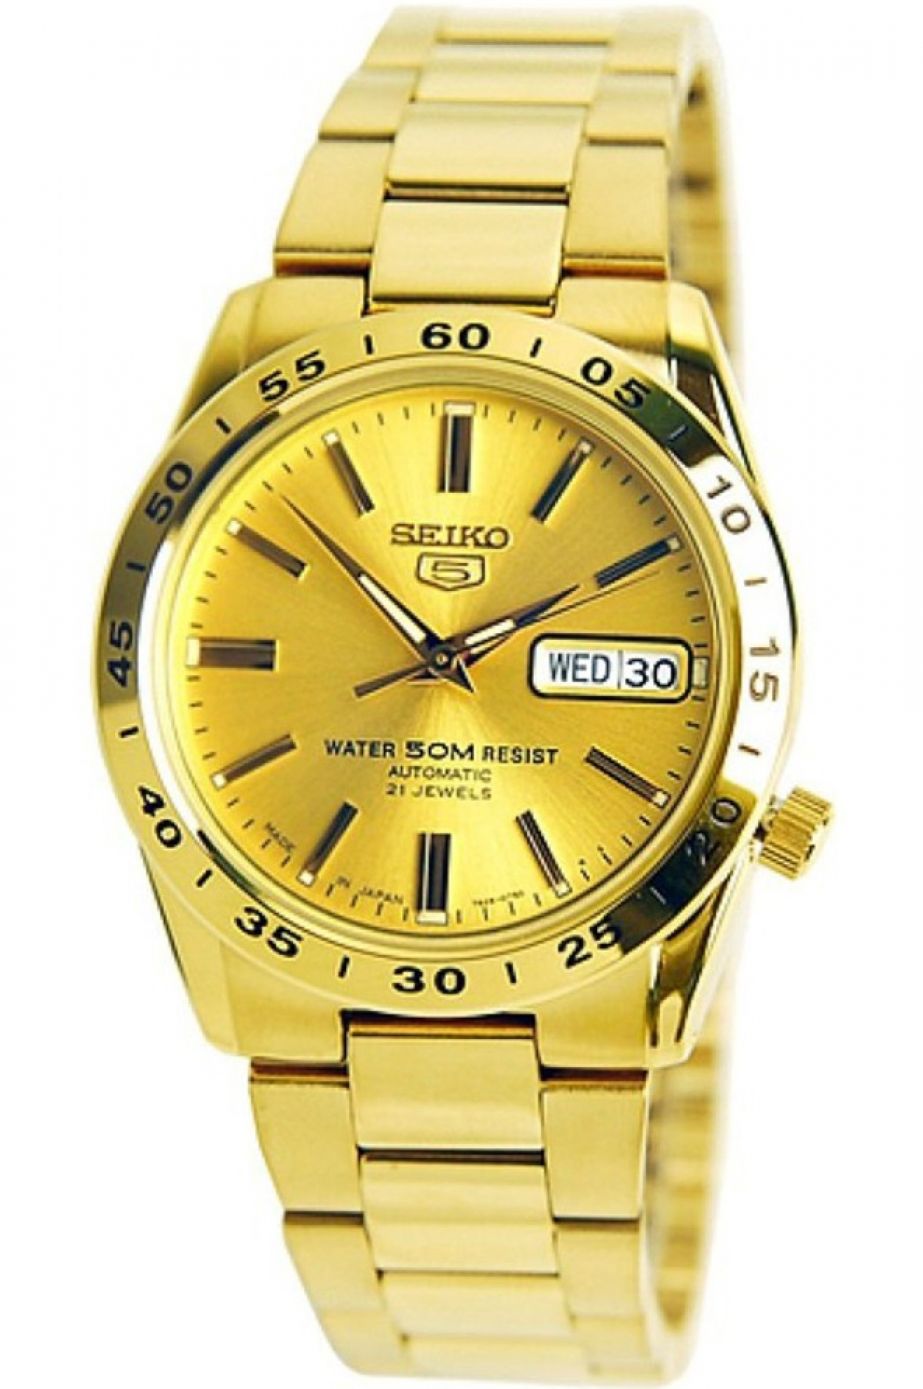 Seiko часы браслеты. Золотые часы Сейко. Часы Seiko 7s36. Часы Seiko 6d1092. Часы Seiko золотые.